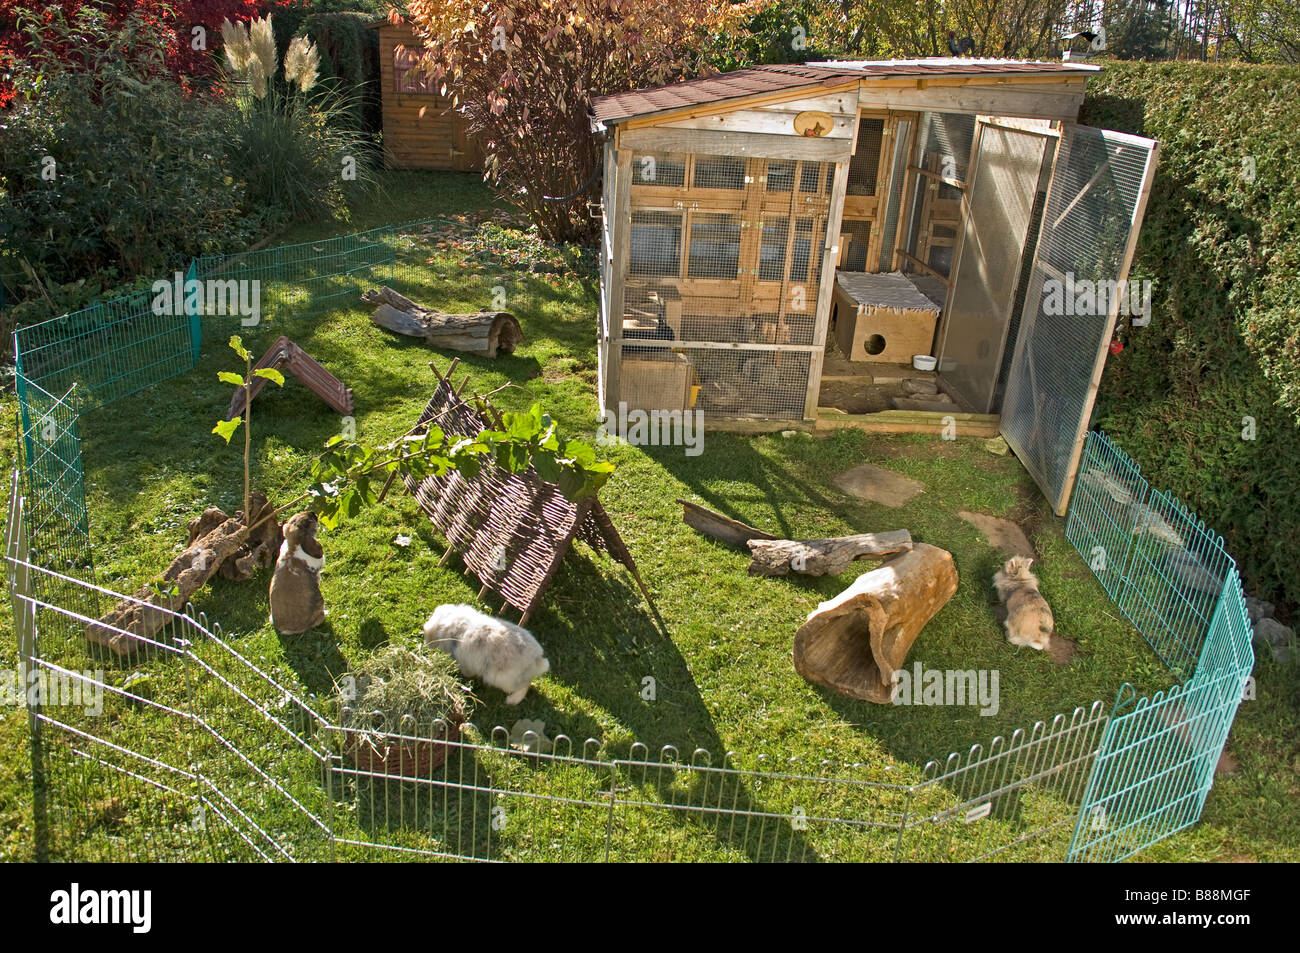 Domestic Rabbits In Outdoor Enclosure Stock Photo Alamy